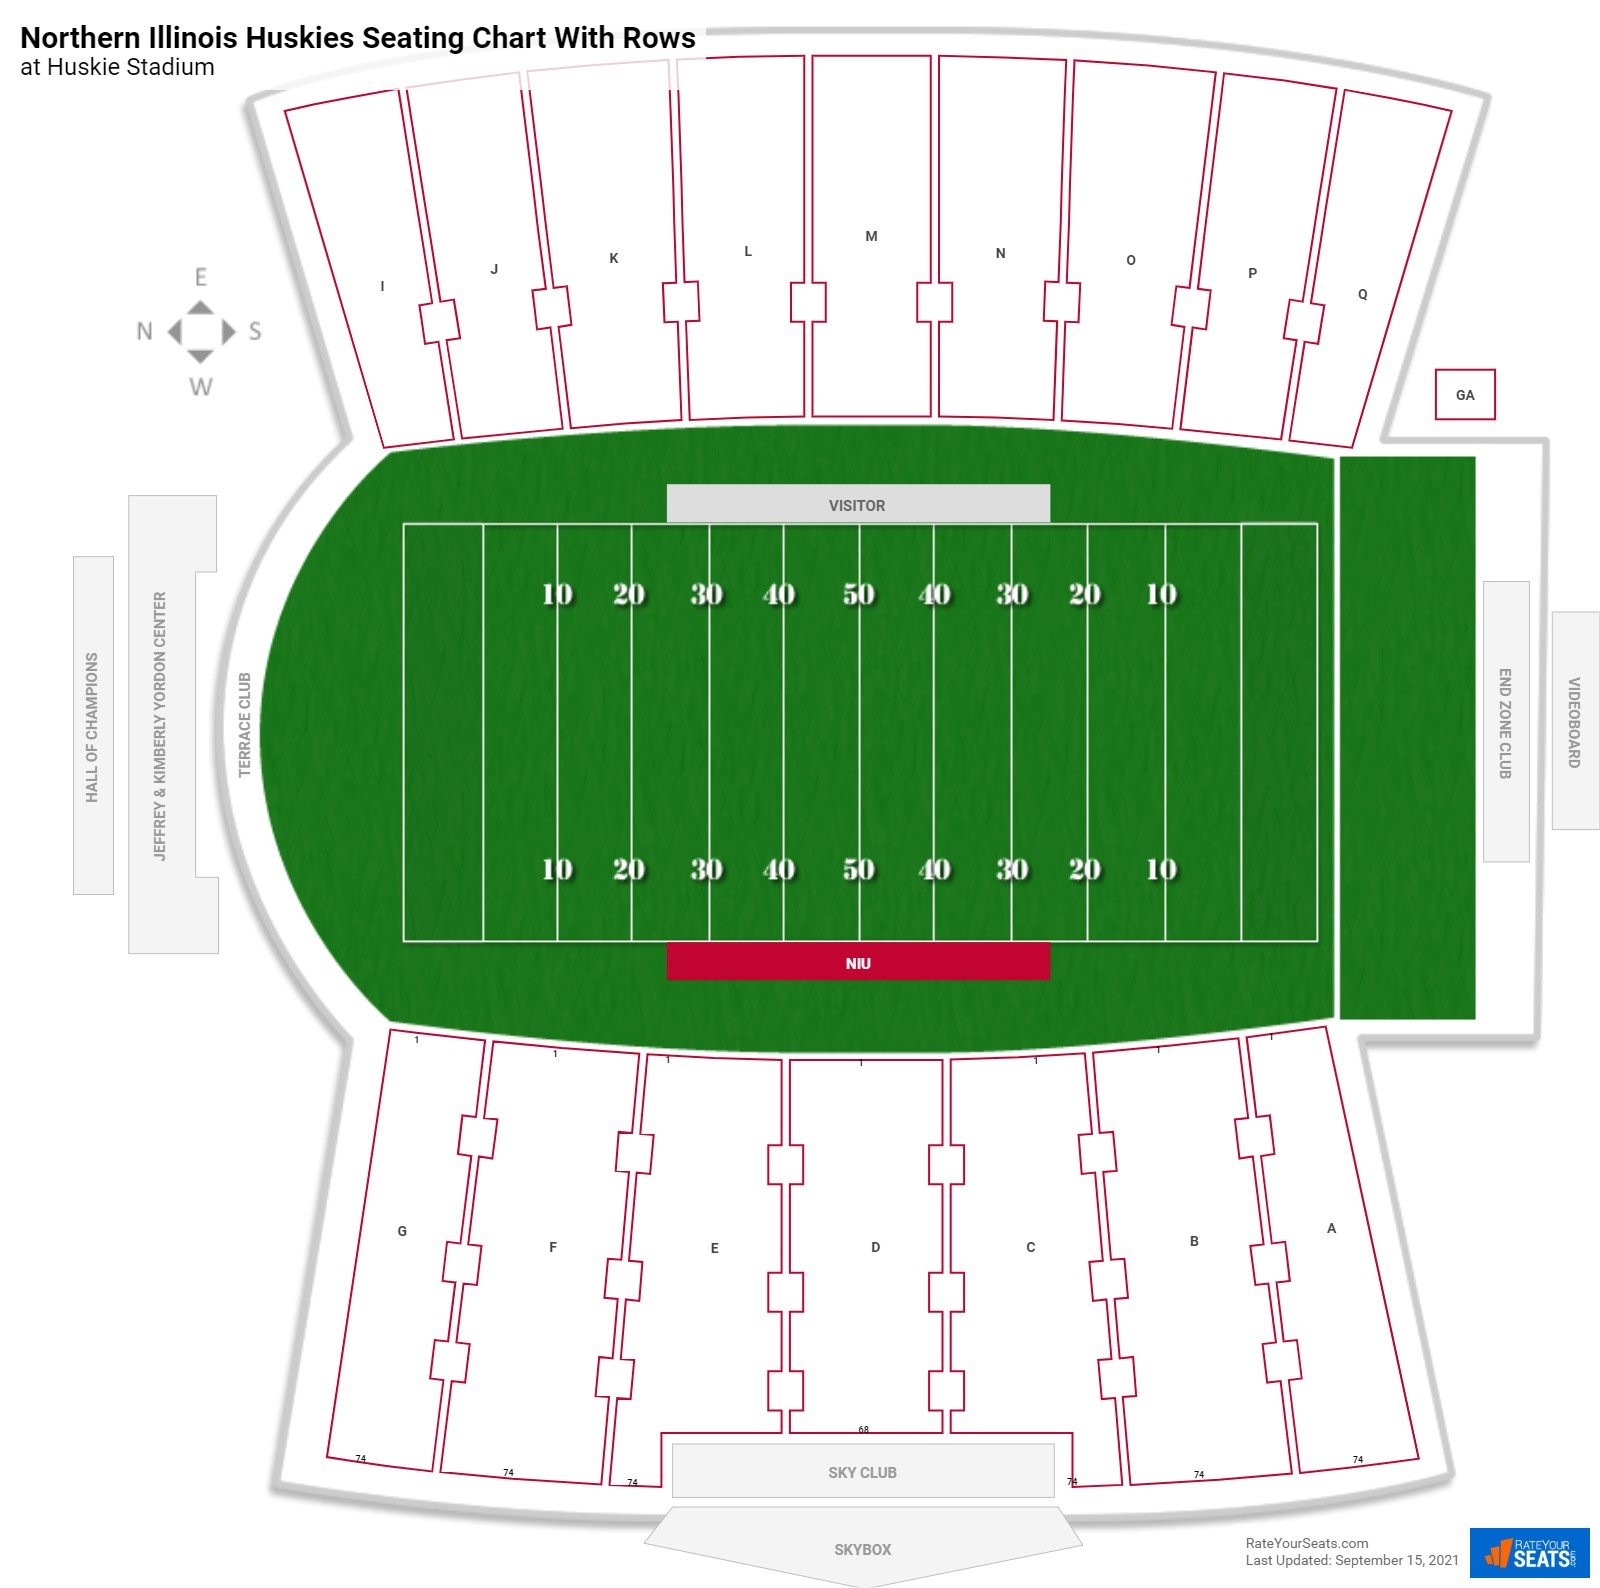 Huskie Stadium seating chart with row numbers